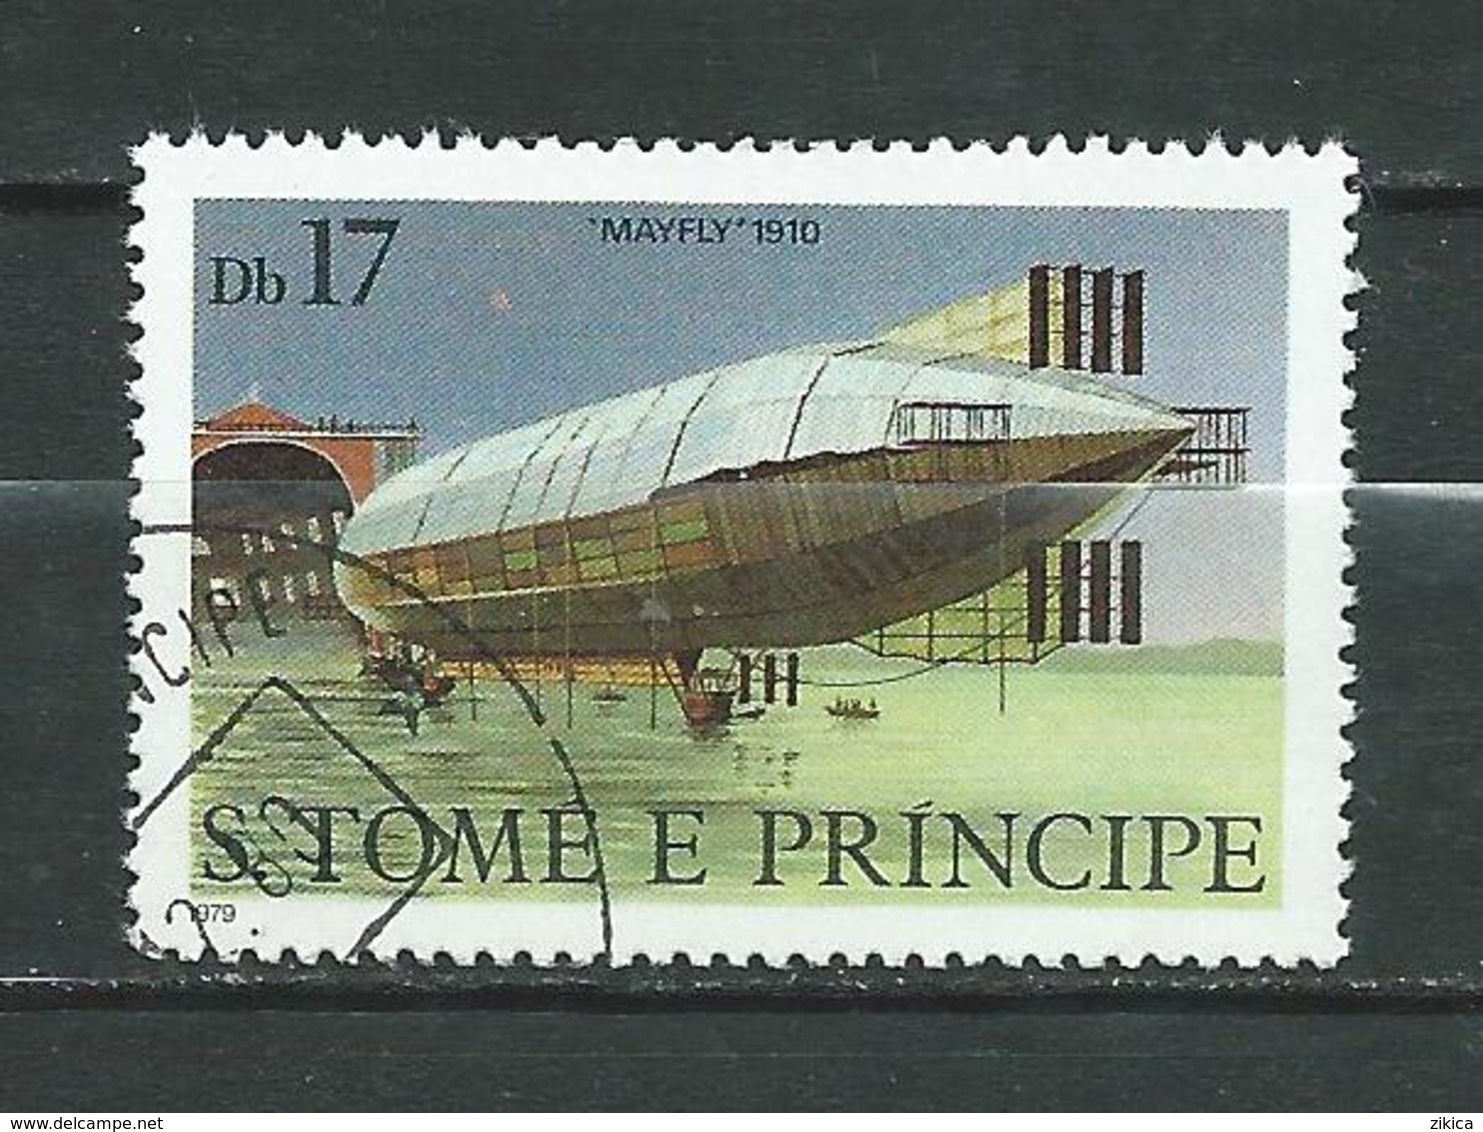 Sao Tome And Principe 1979 History Of Aviation - Airships- "Mayfly", 1910 - Used Stamp 1v. - Sao Tome And Principe